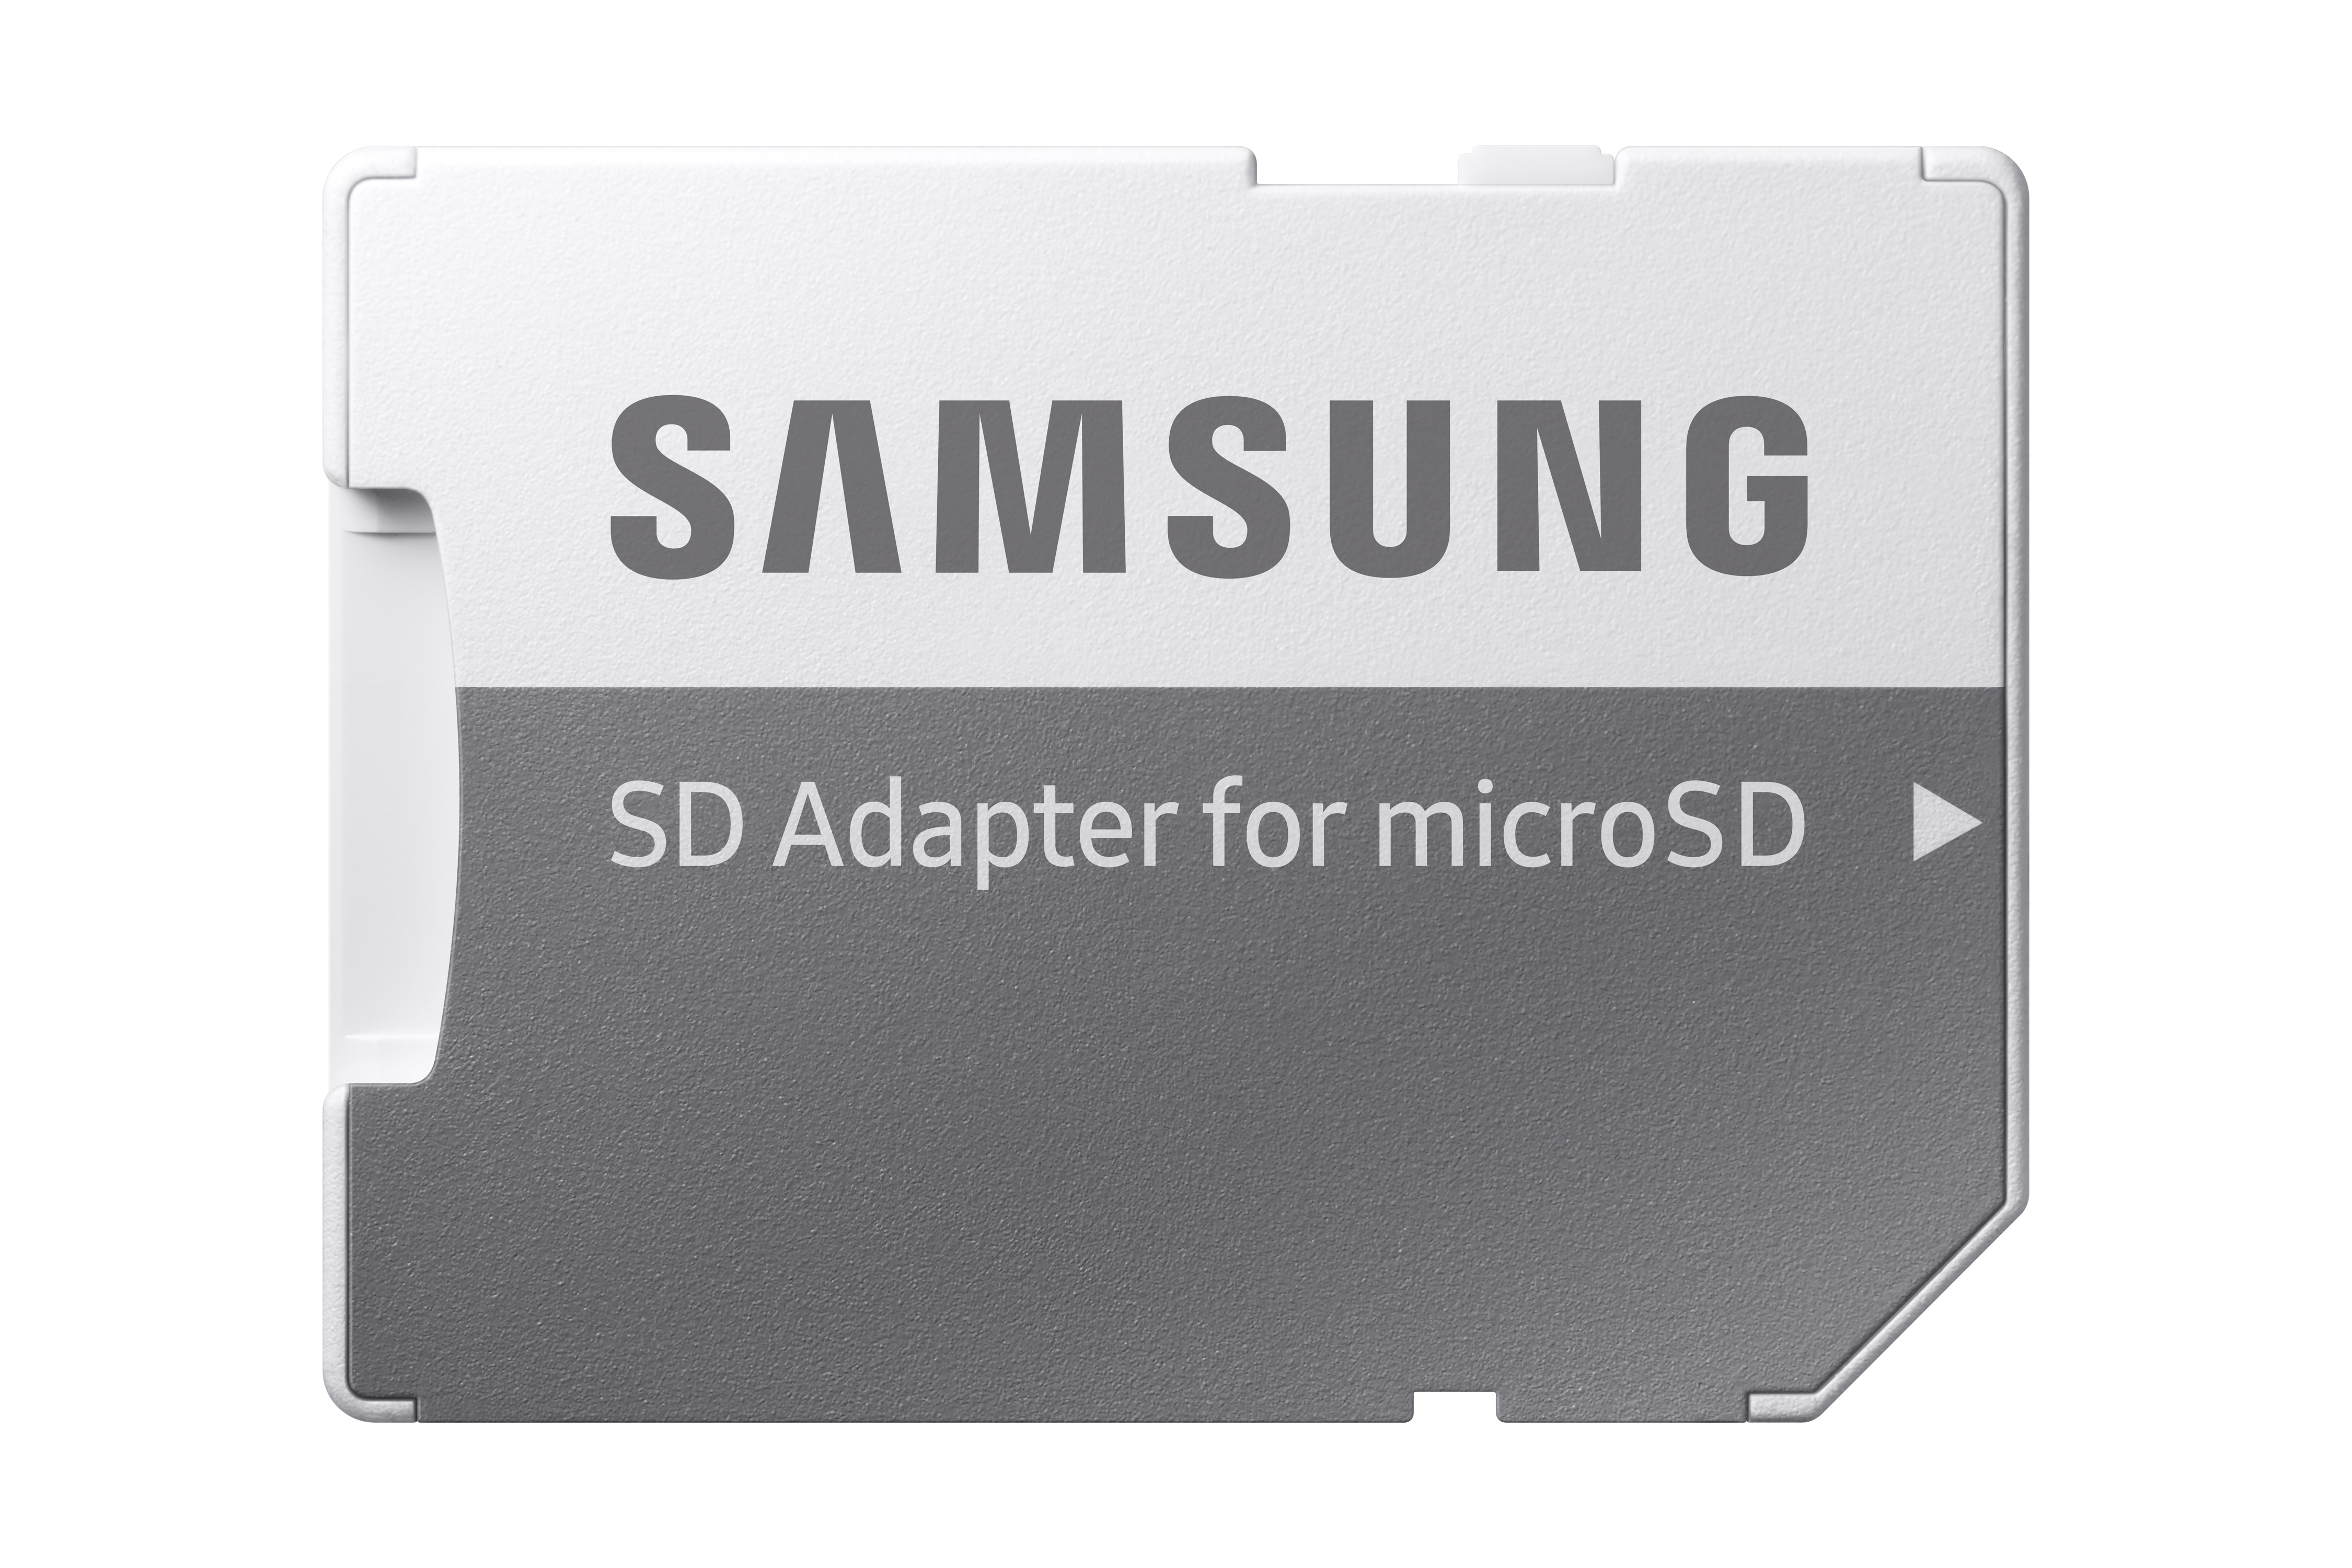 Samsung Microsdhc Evo V2